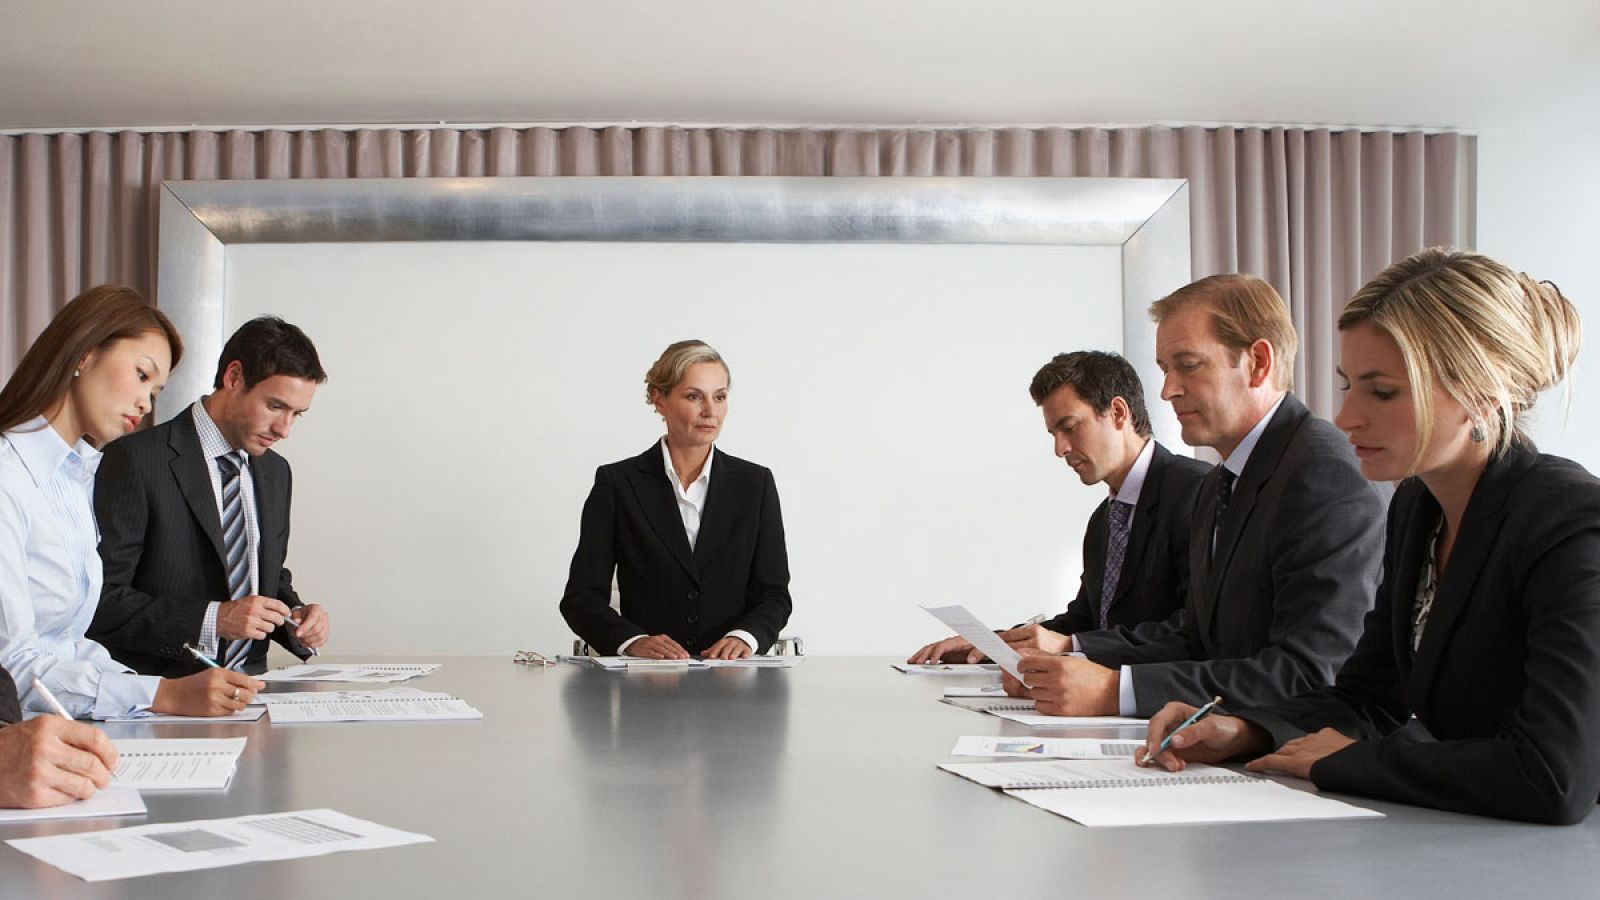 Una alta ejecutiva dirige una reunión en una empresa